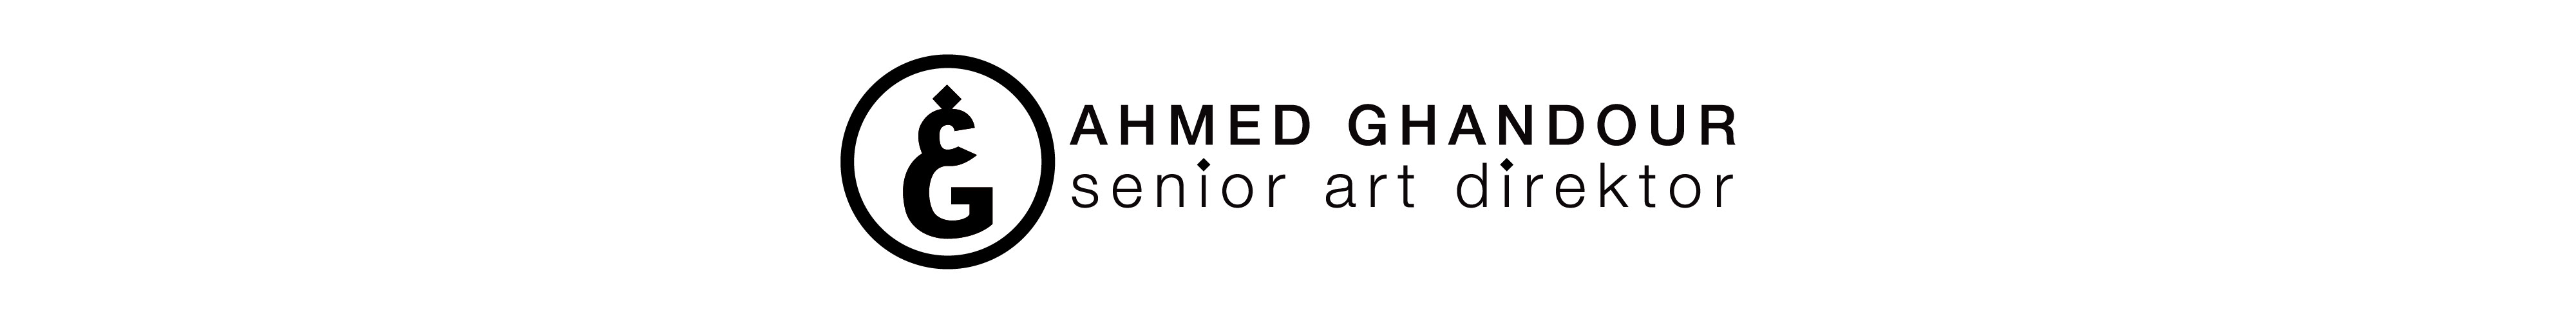 Ahmed Ghandour's profile banner